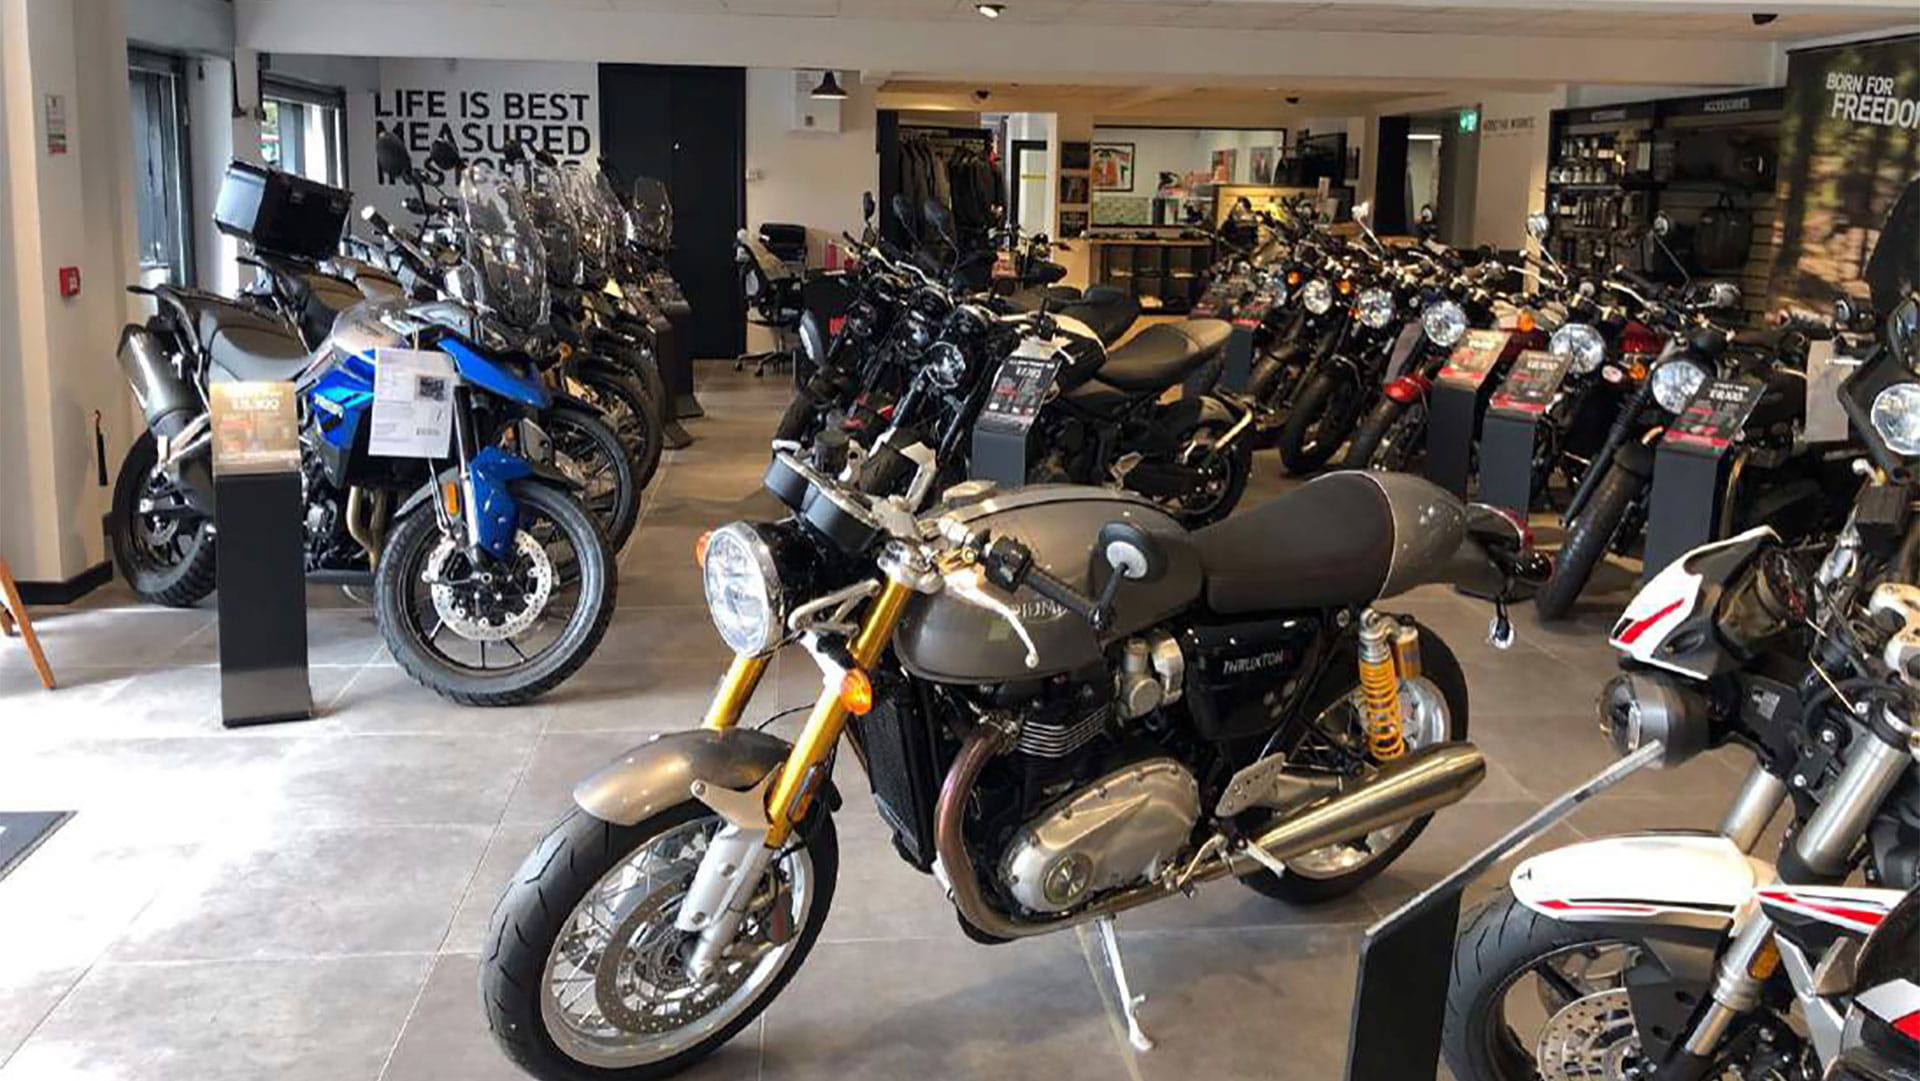 Triumph motorcycles dealership in Abingdon - Triumph Oxford